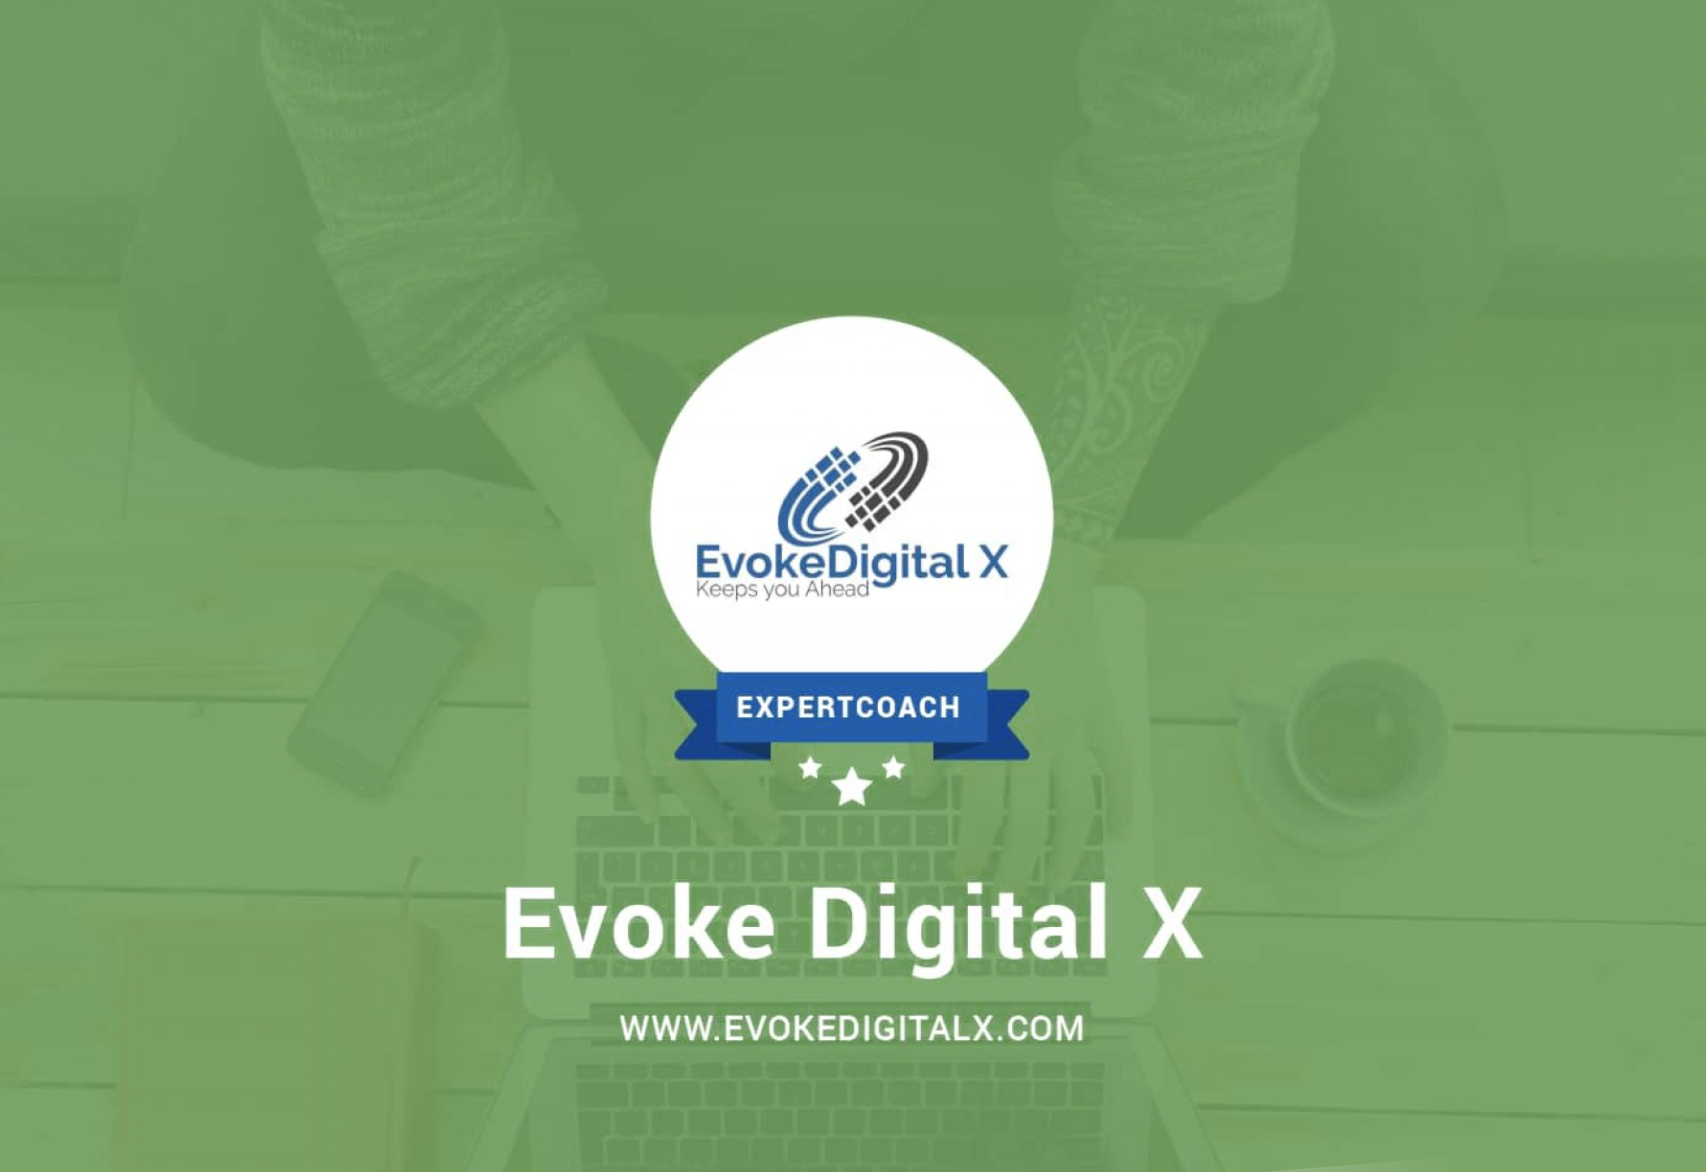 ExpertCoach - EvokeDigital X